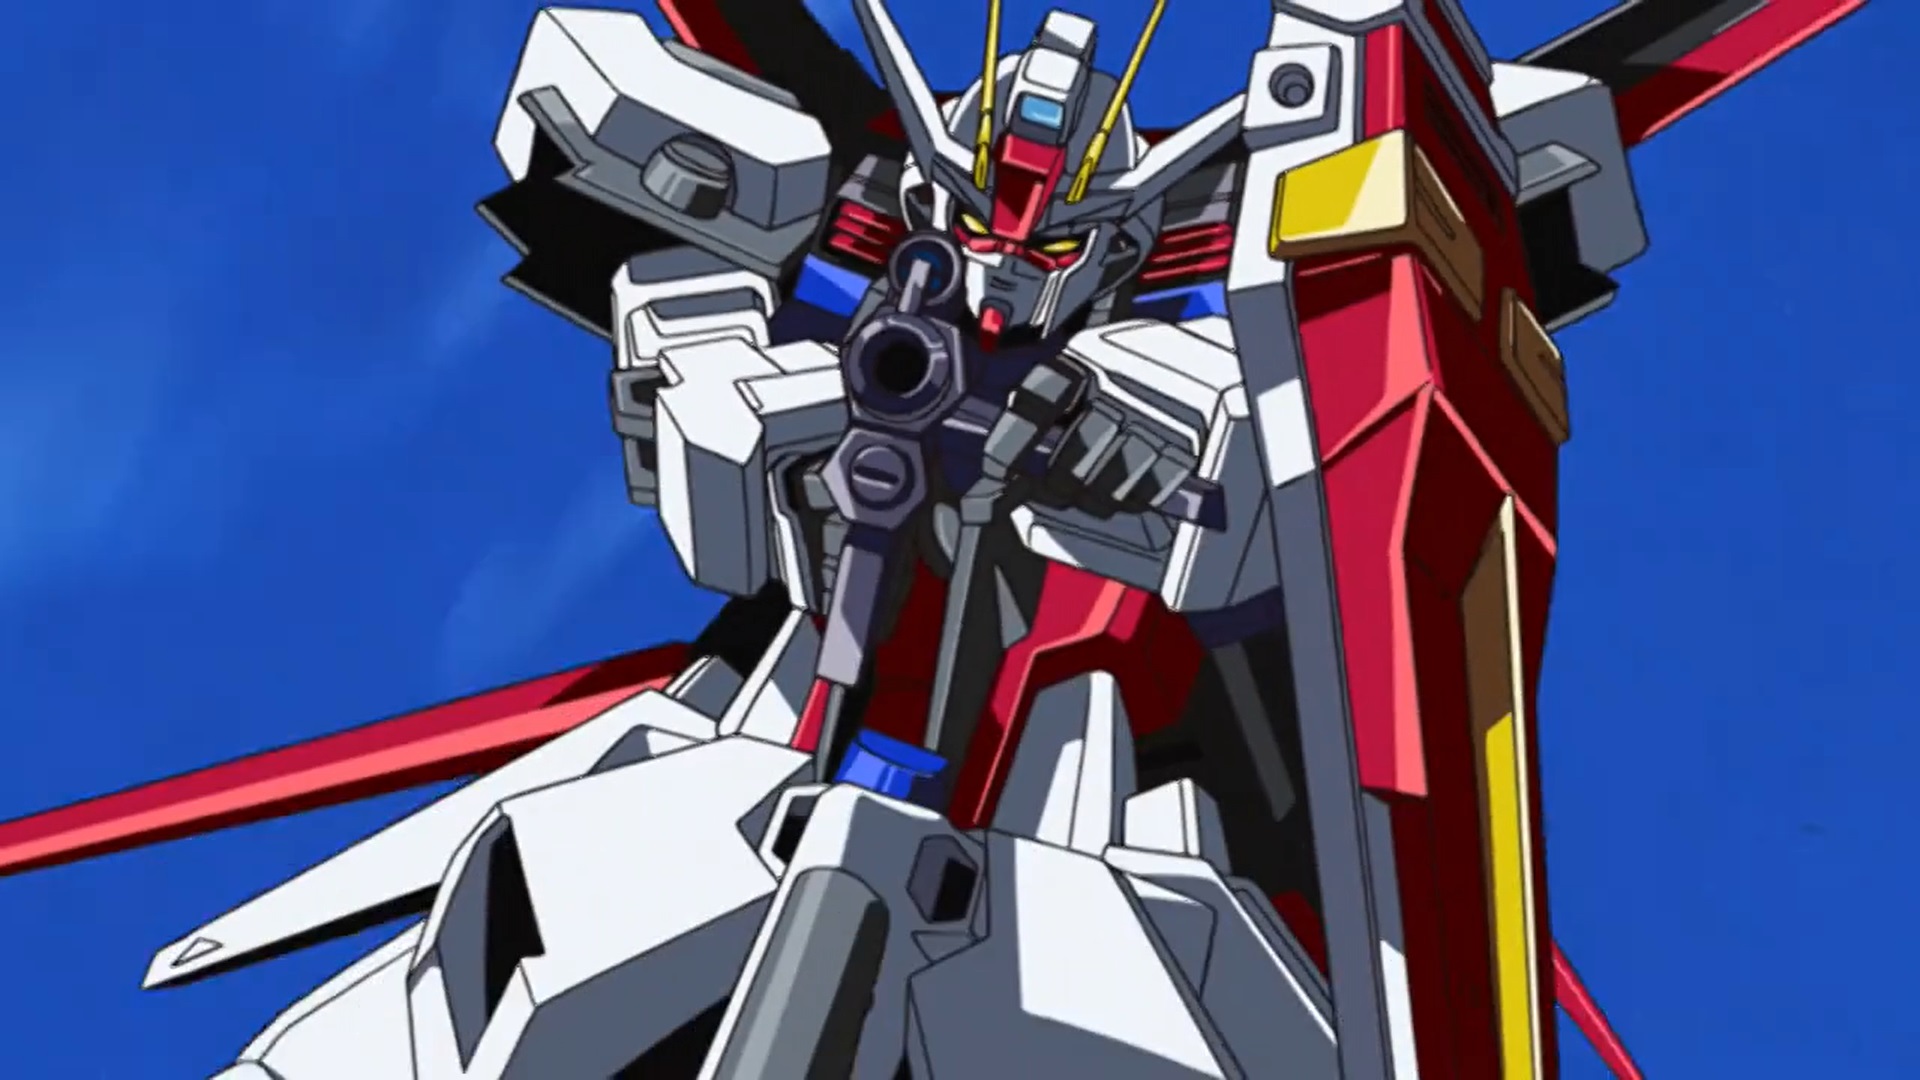 Anime 1920x1080 anime anime screenshot Aile Strike Gundam Mobile Suit Gundam SEED Gundam mechs Super Robot Taisen artwork digital art